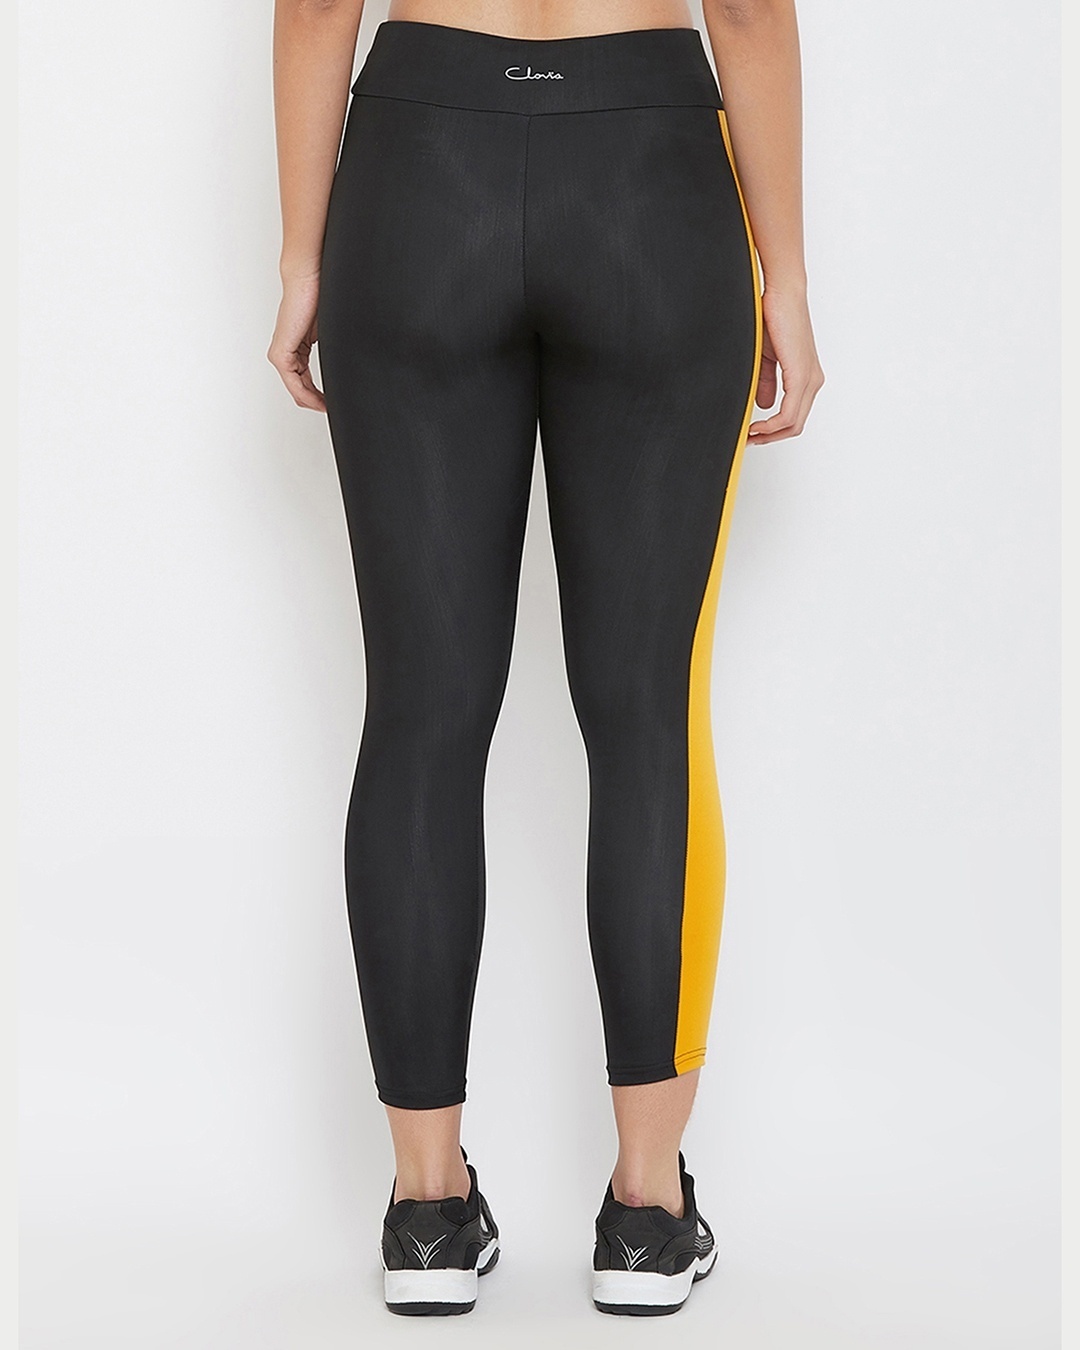 Shop Women's Black & Yellow Color Block Slim Fit Tights